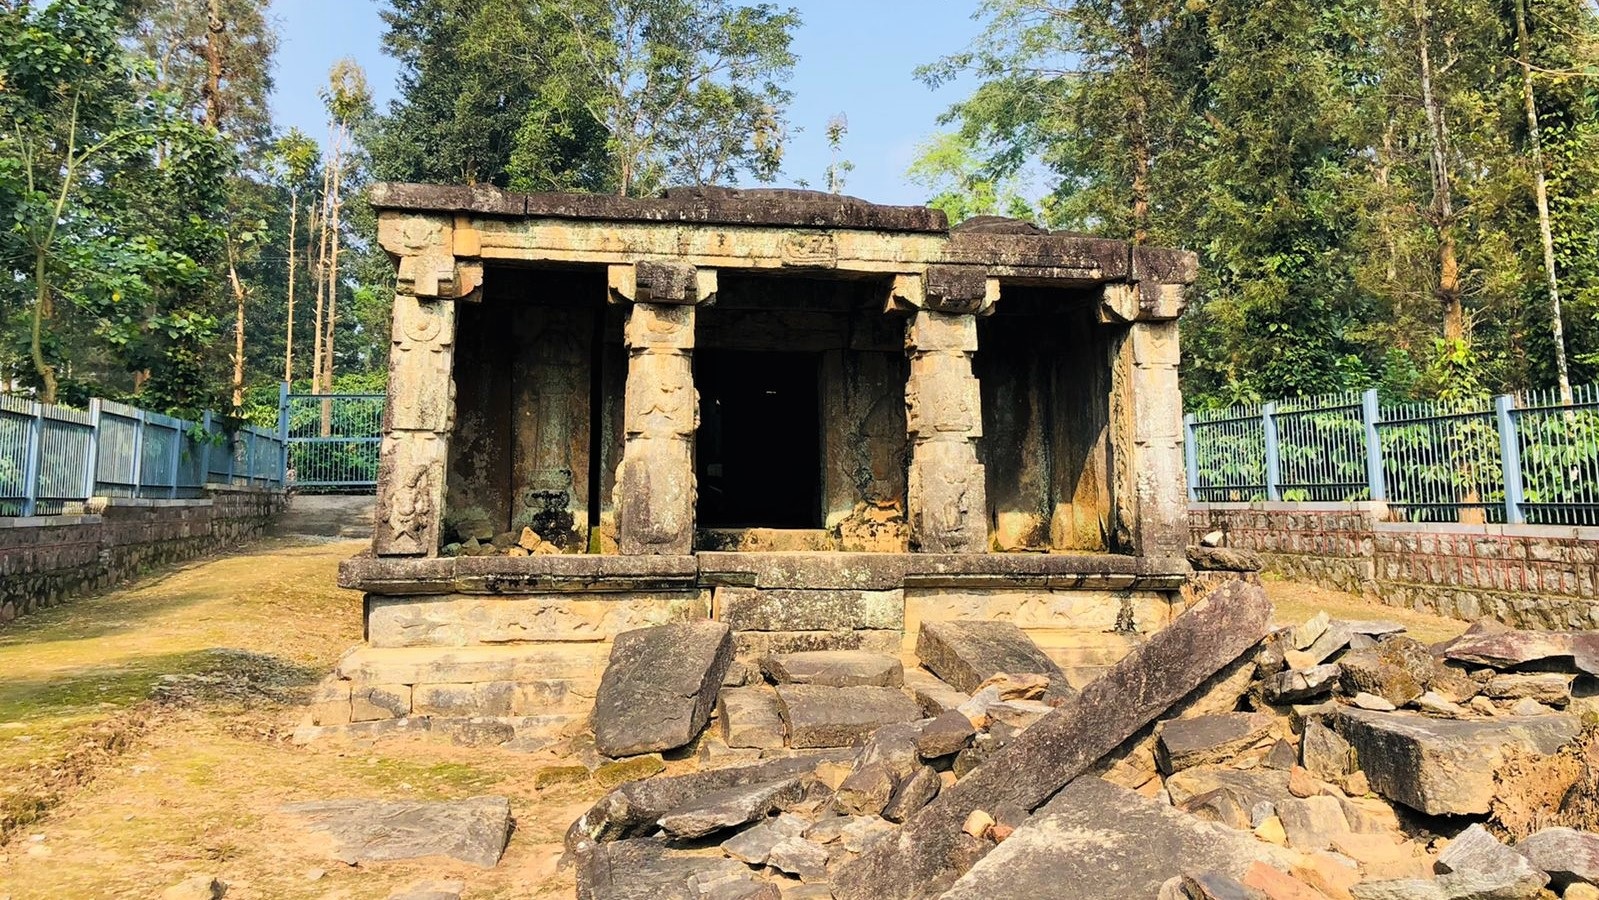 Transpotation in Kayakkunn Vishnugudi Temple